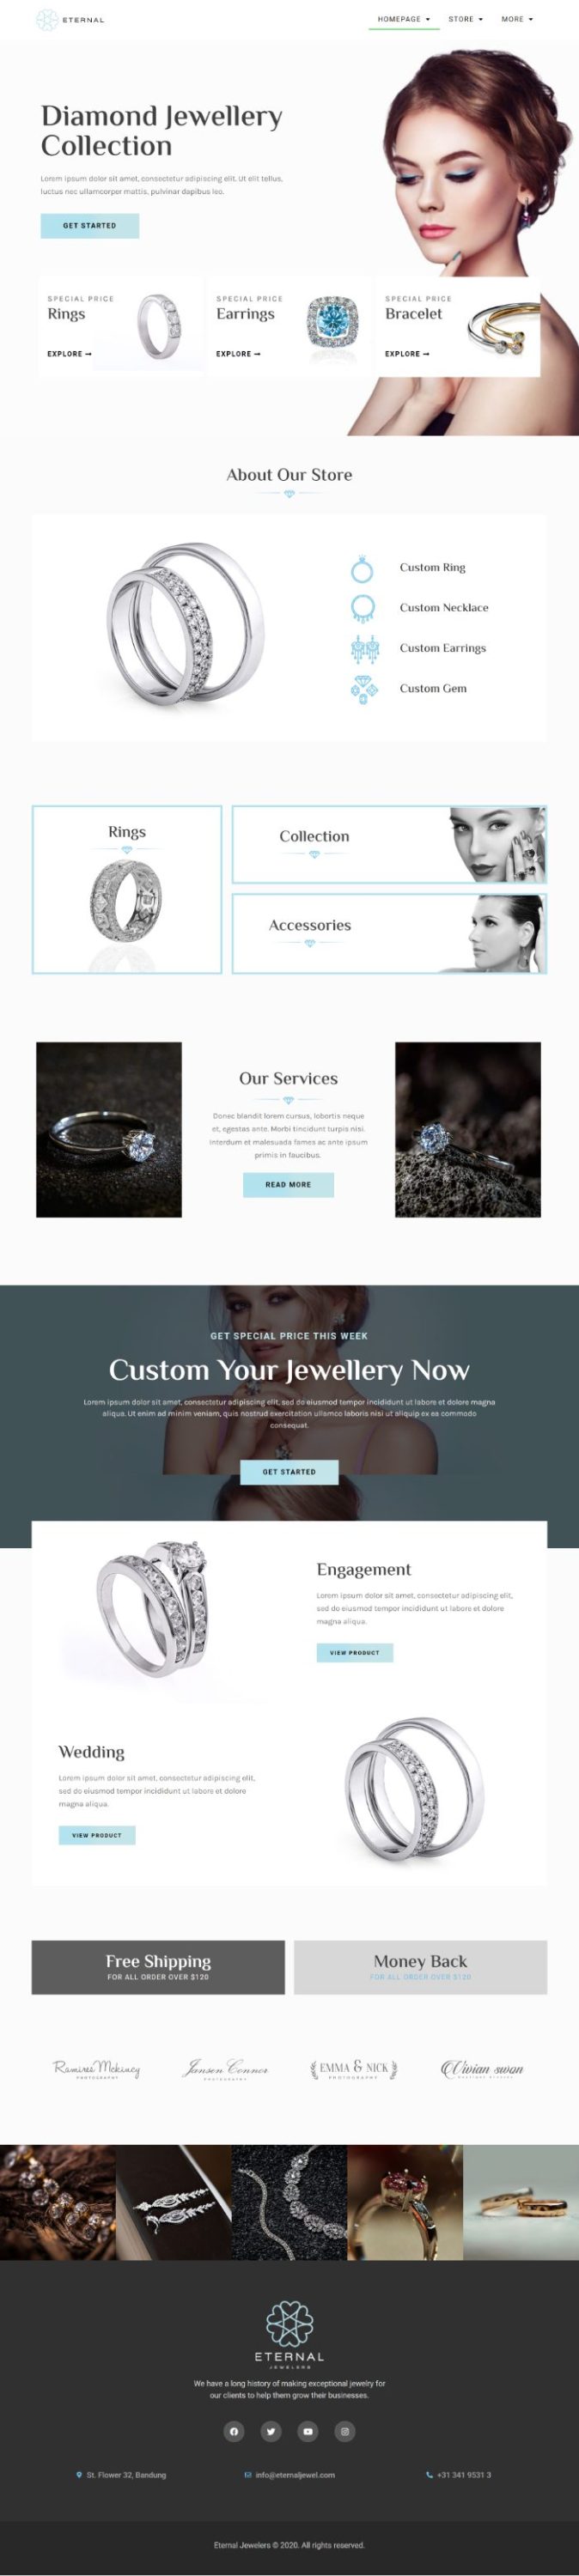 Mẫu website dịch vụ tiệc cưới - Wedding Jewelry 3